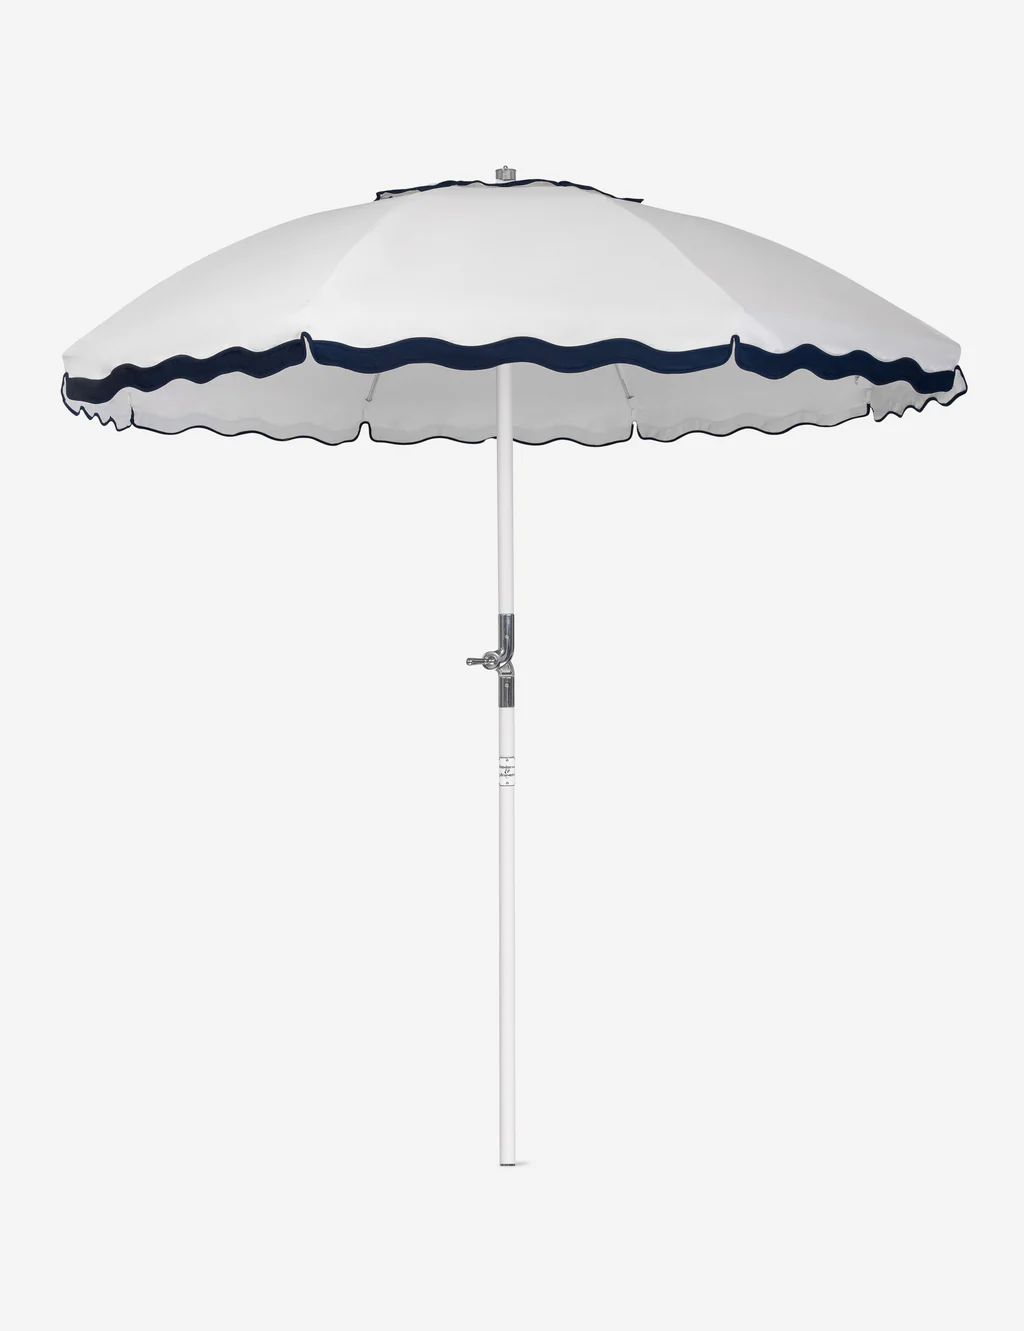 Club Umbrella by Business & Pleasure Co. | Lulu and Georgia 